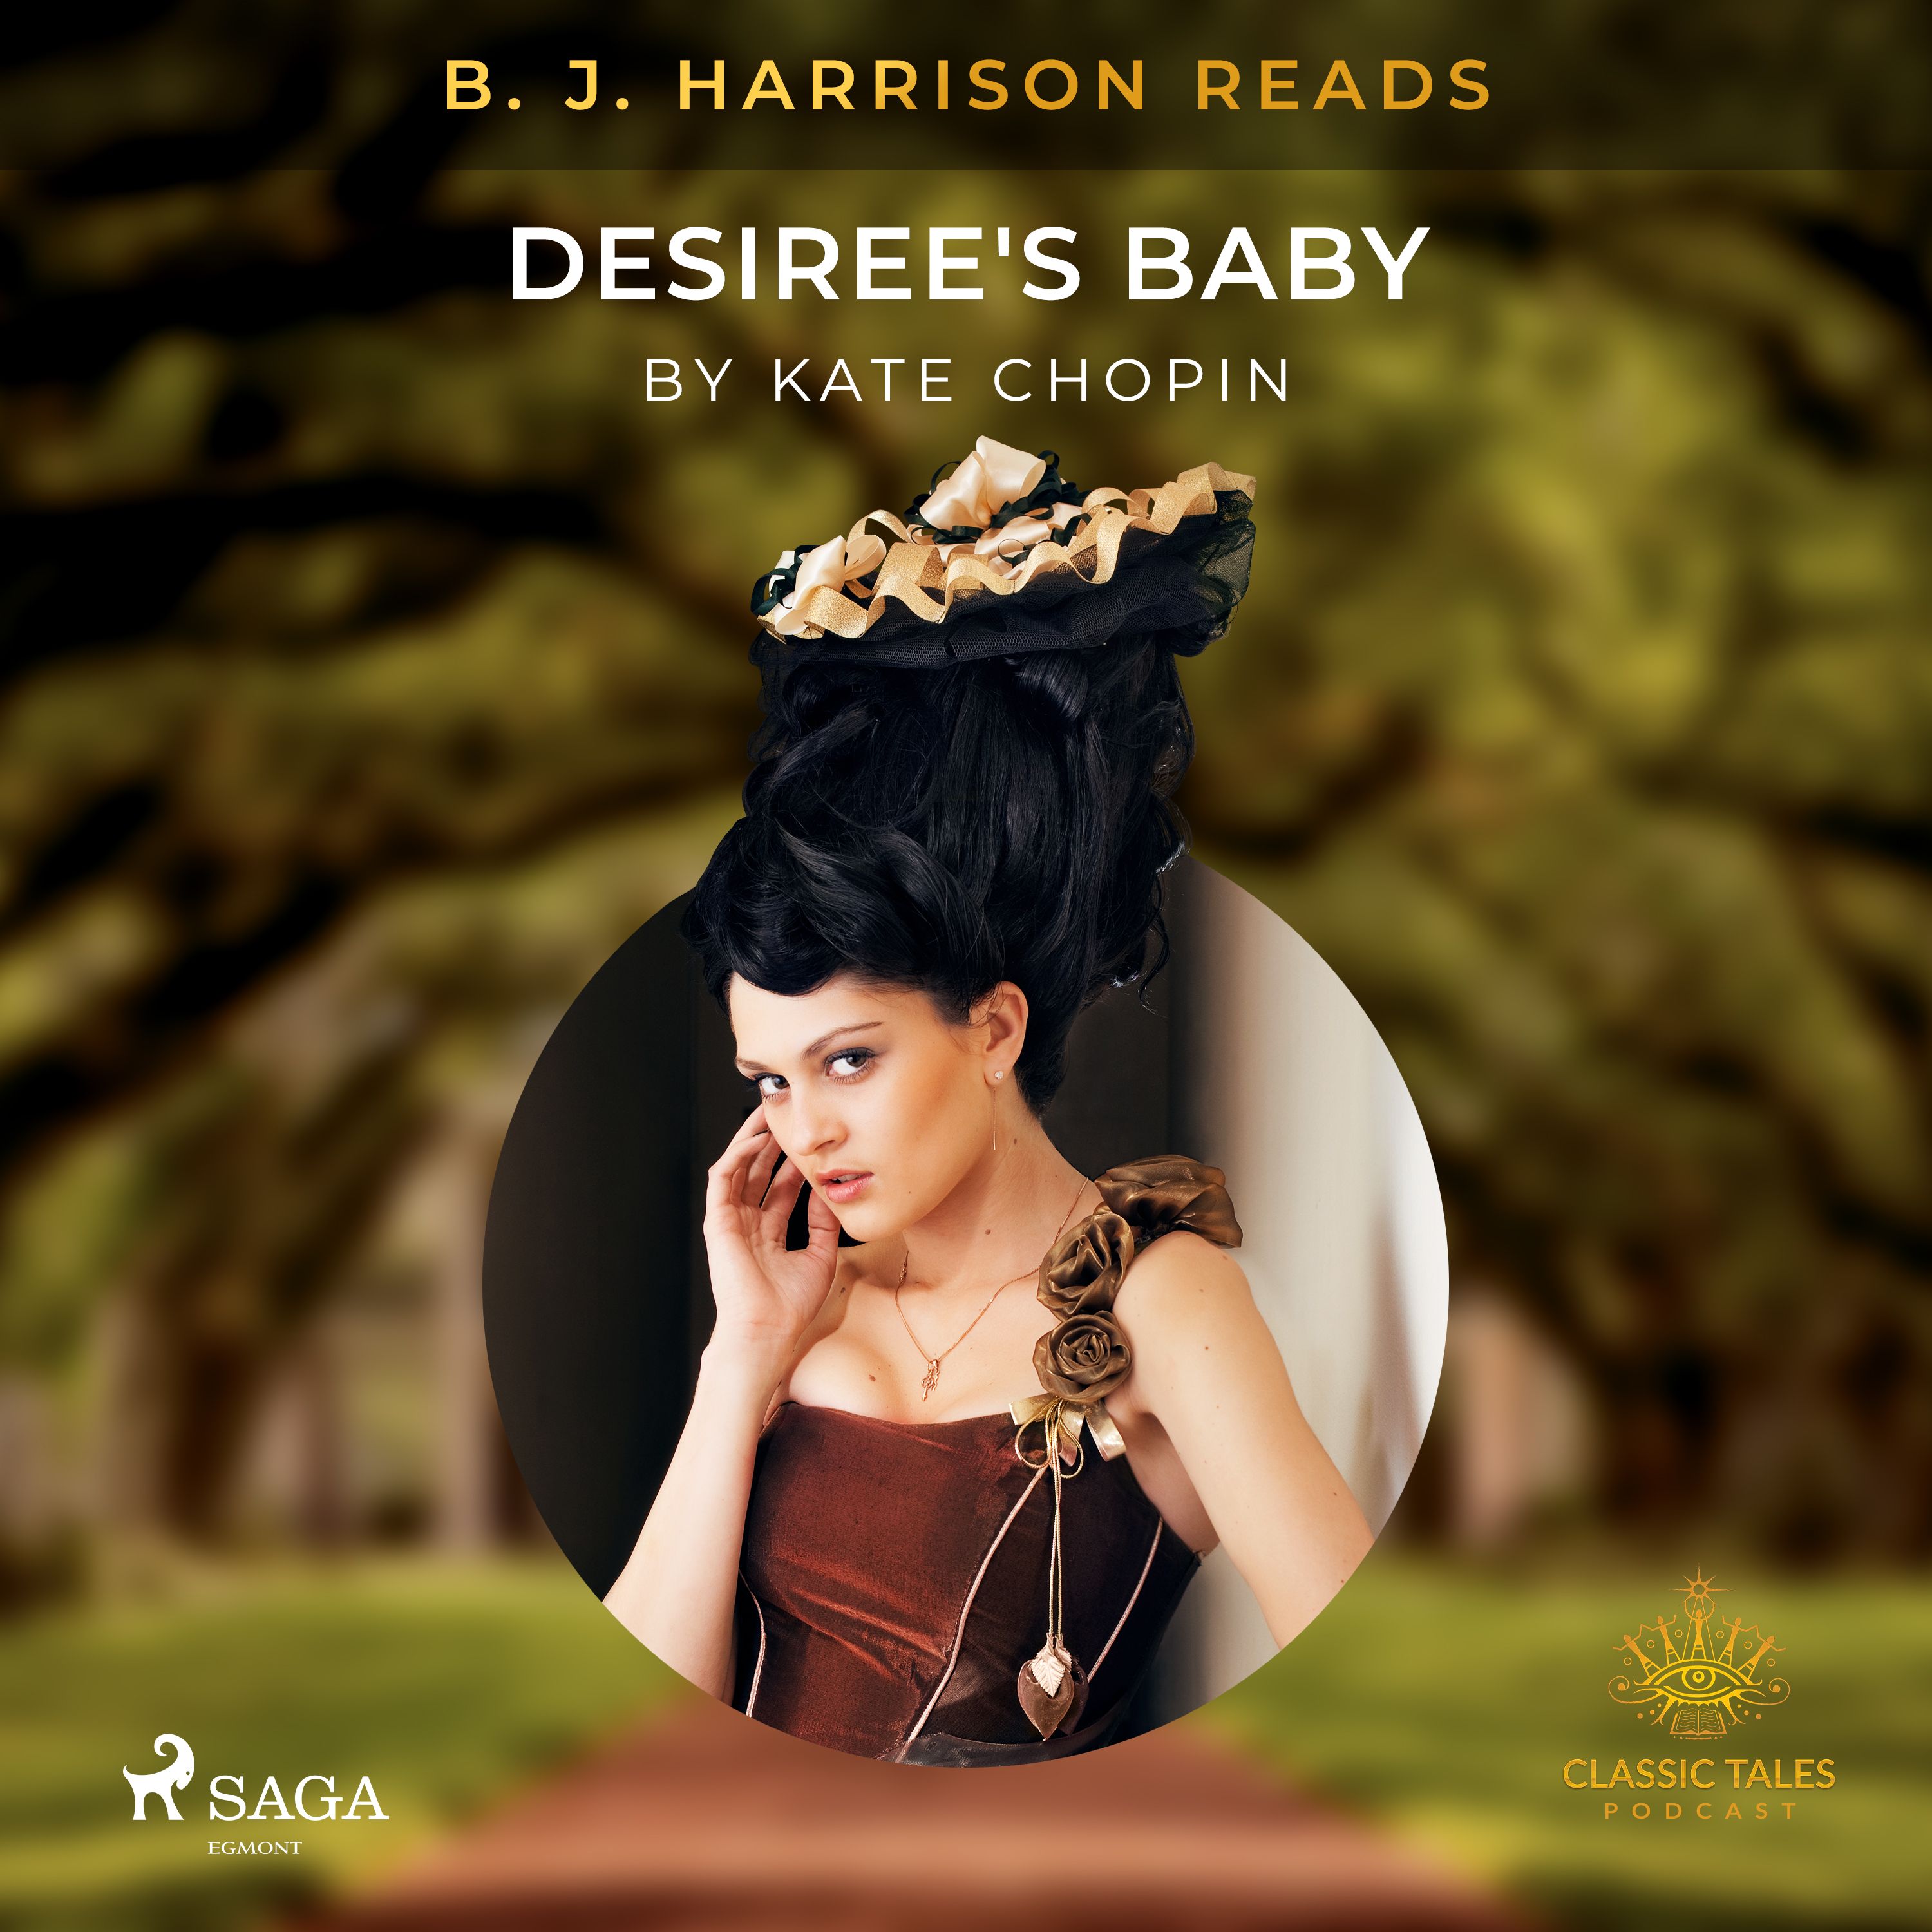 B. J. Harrison Reads Desiree's Baby, ljudbok av Kate Chopin